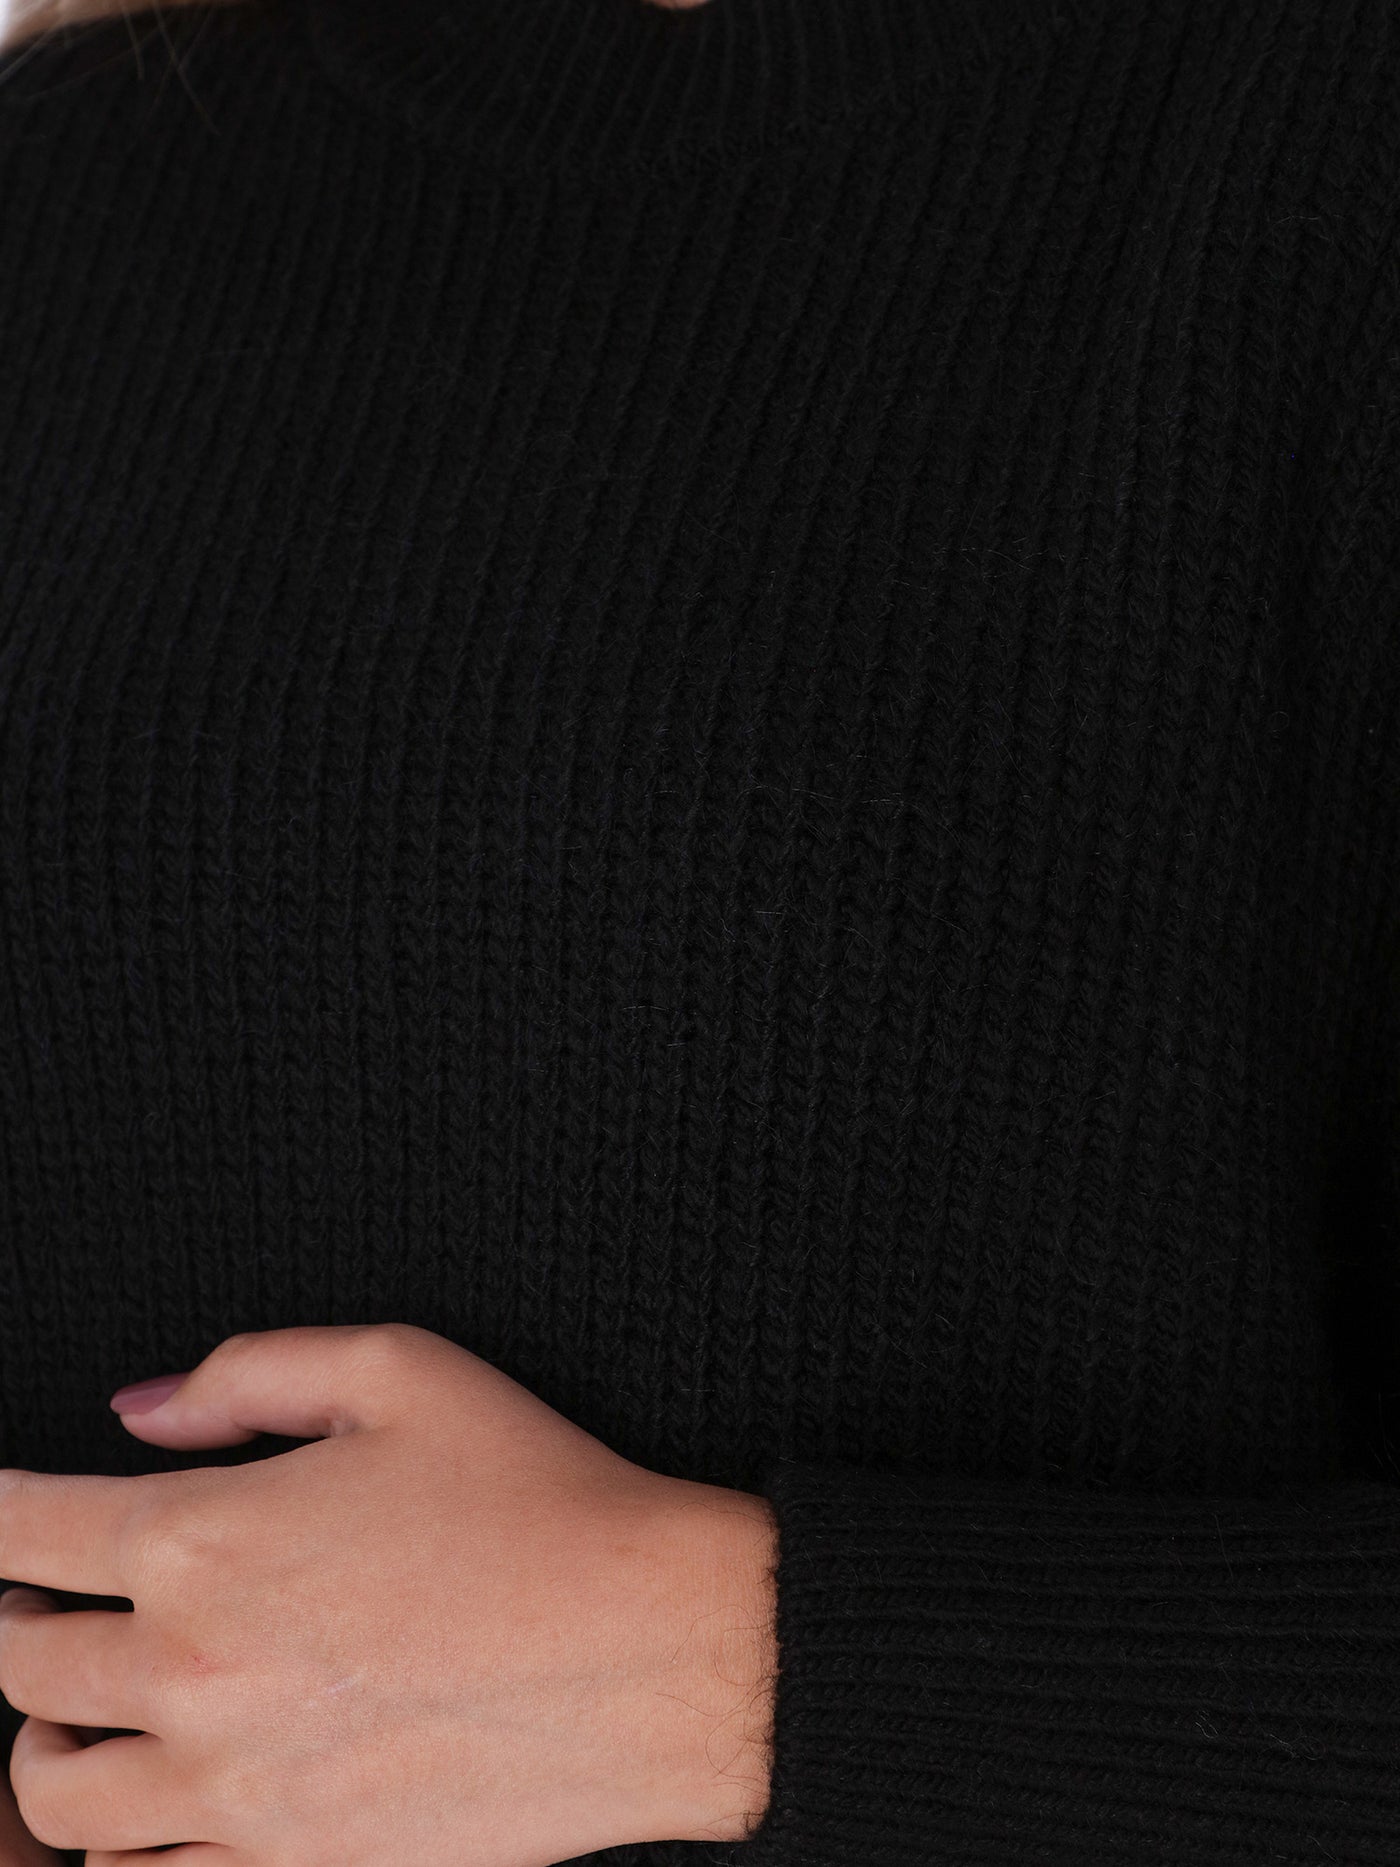 Oversized Pullover - Long Length